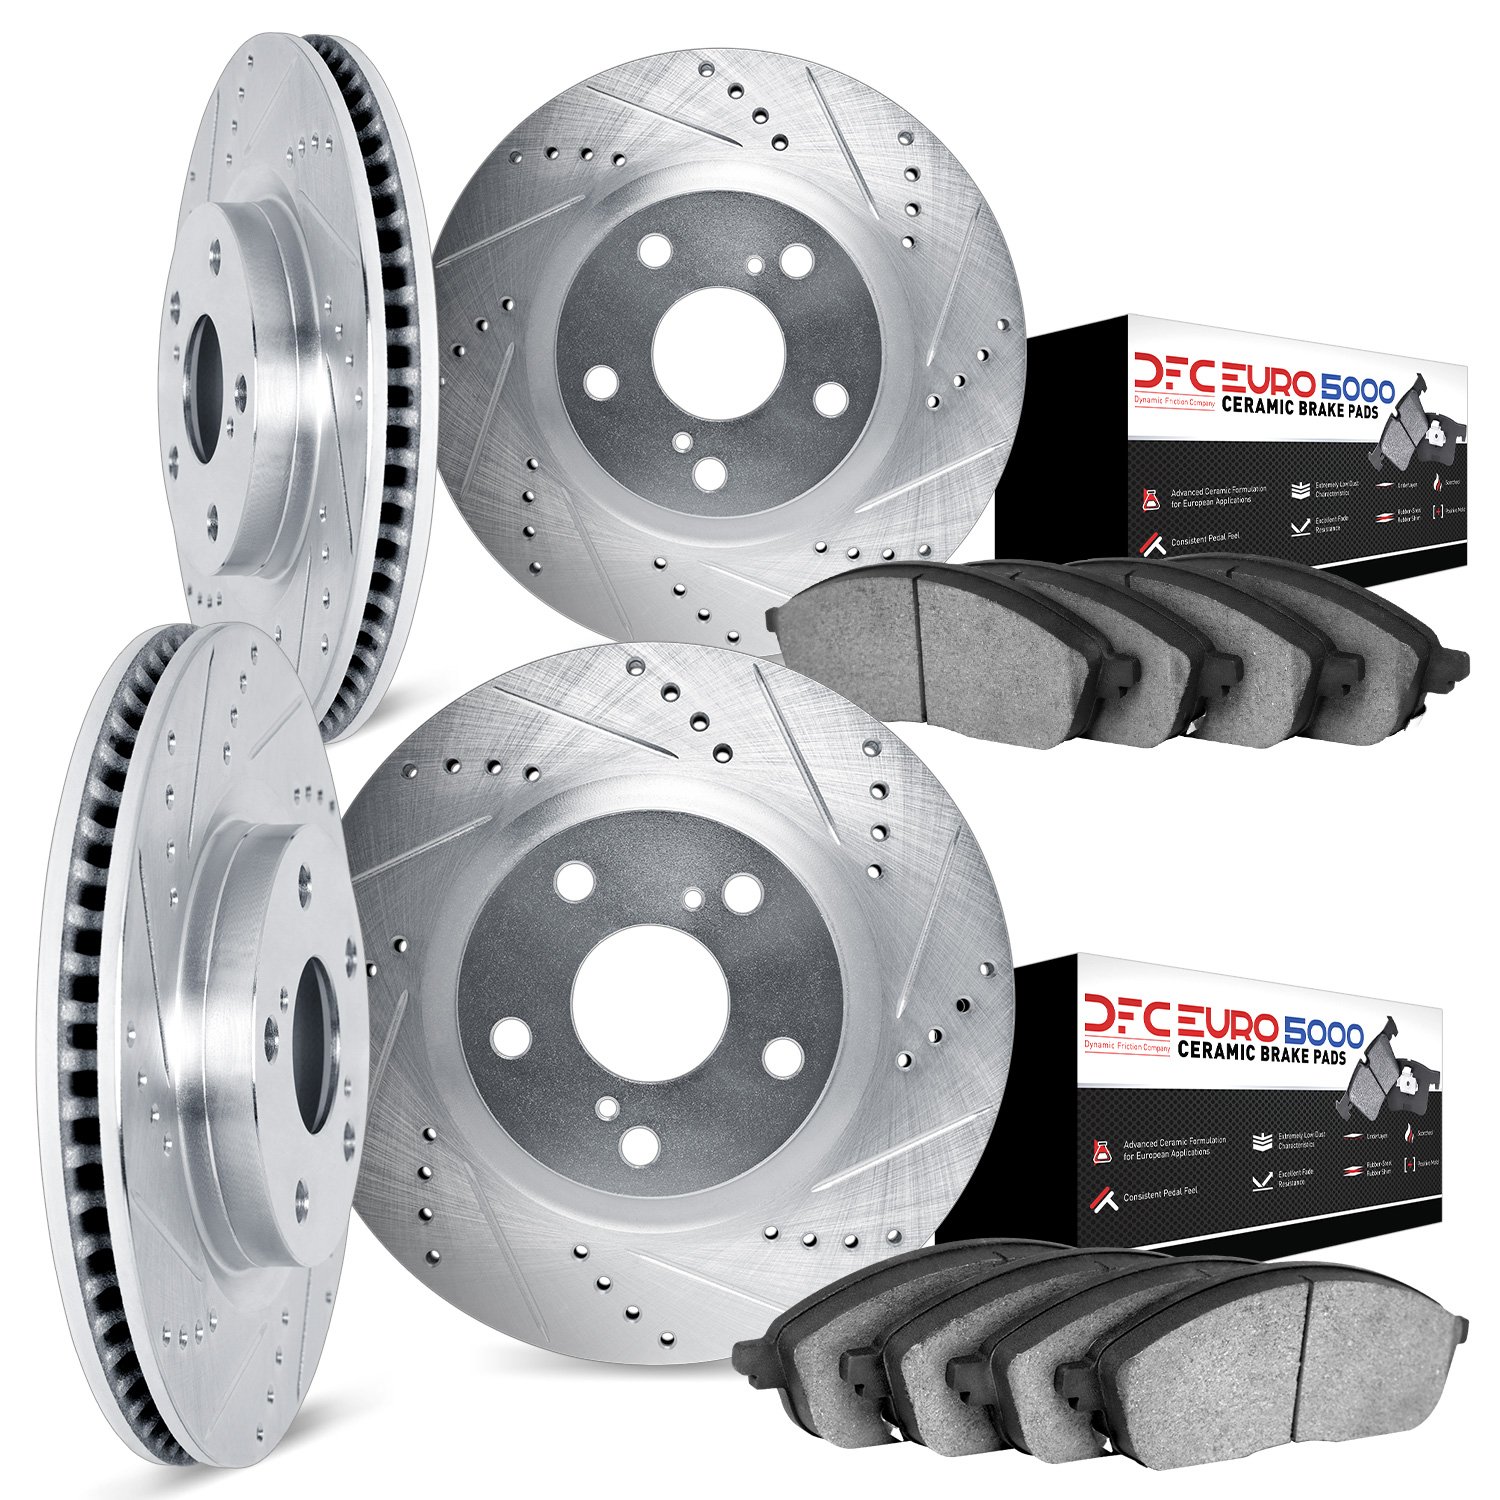 7604-67003 Drilled/Slotted Brake Rotors w/5000 Euro Ceramic Brake Pads Kit [Silver], 2005-2014 Infiniti/Nissan, Position: Front